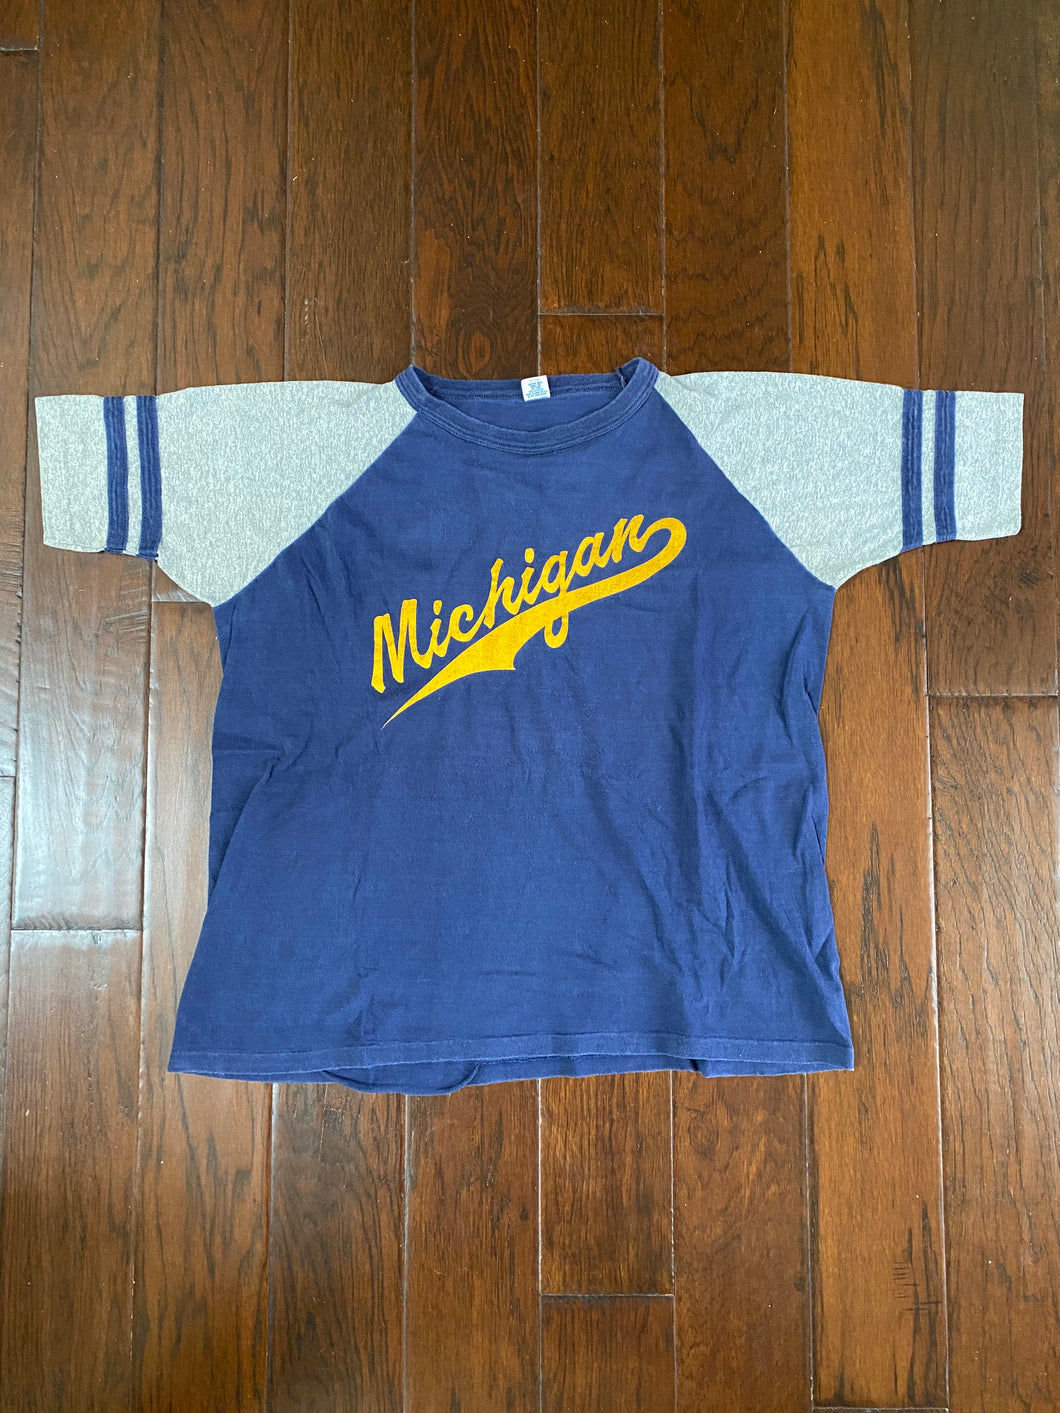 University of Michigan 1980’s Vintage Distressed Baseball Tee